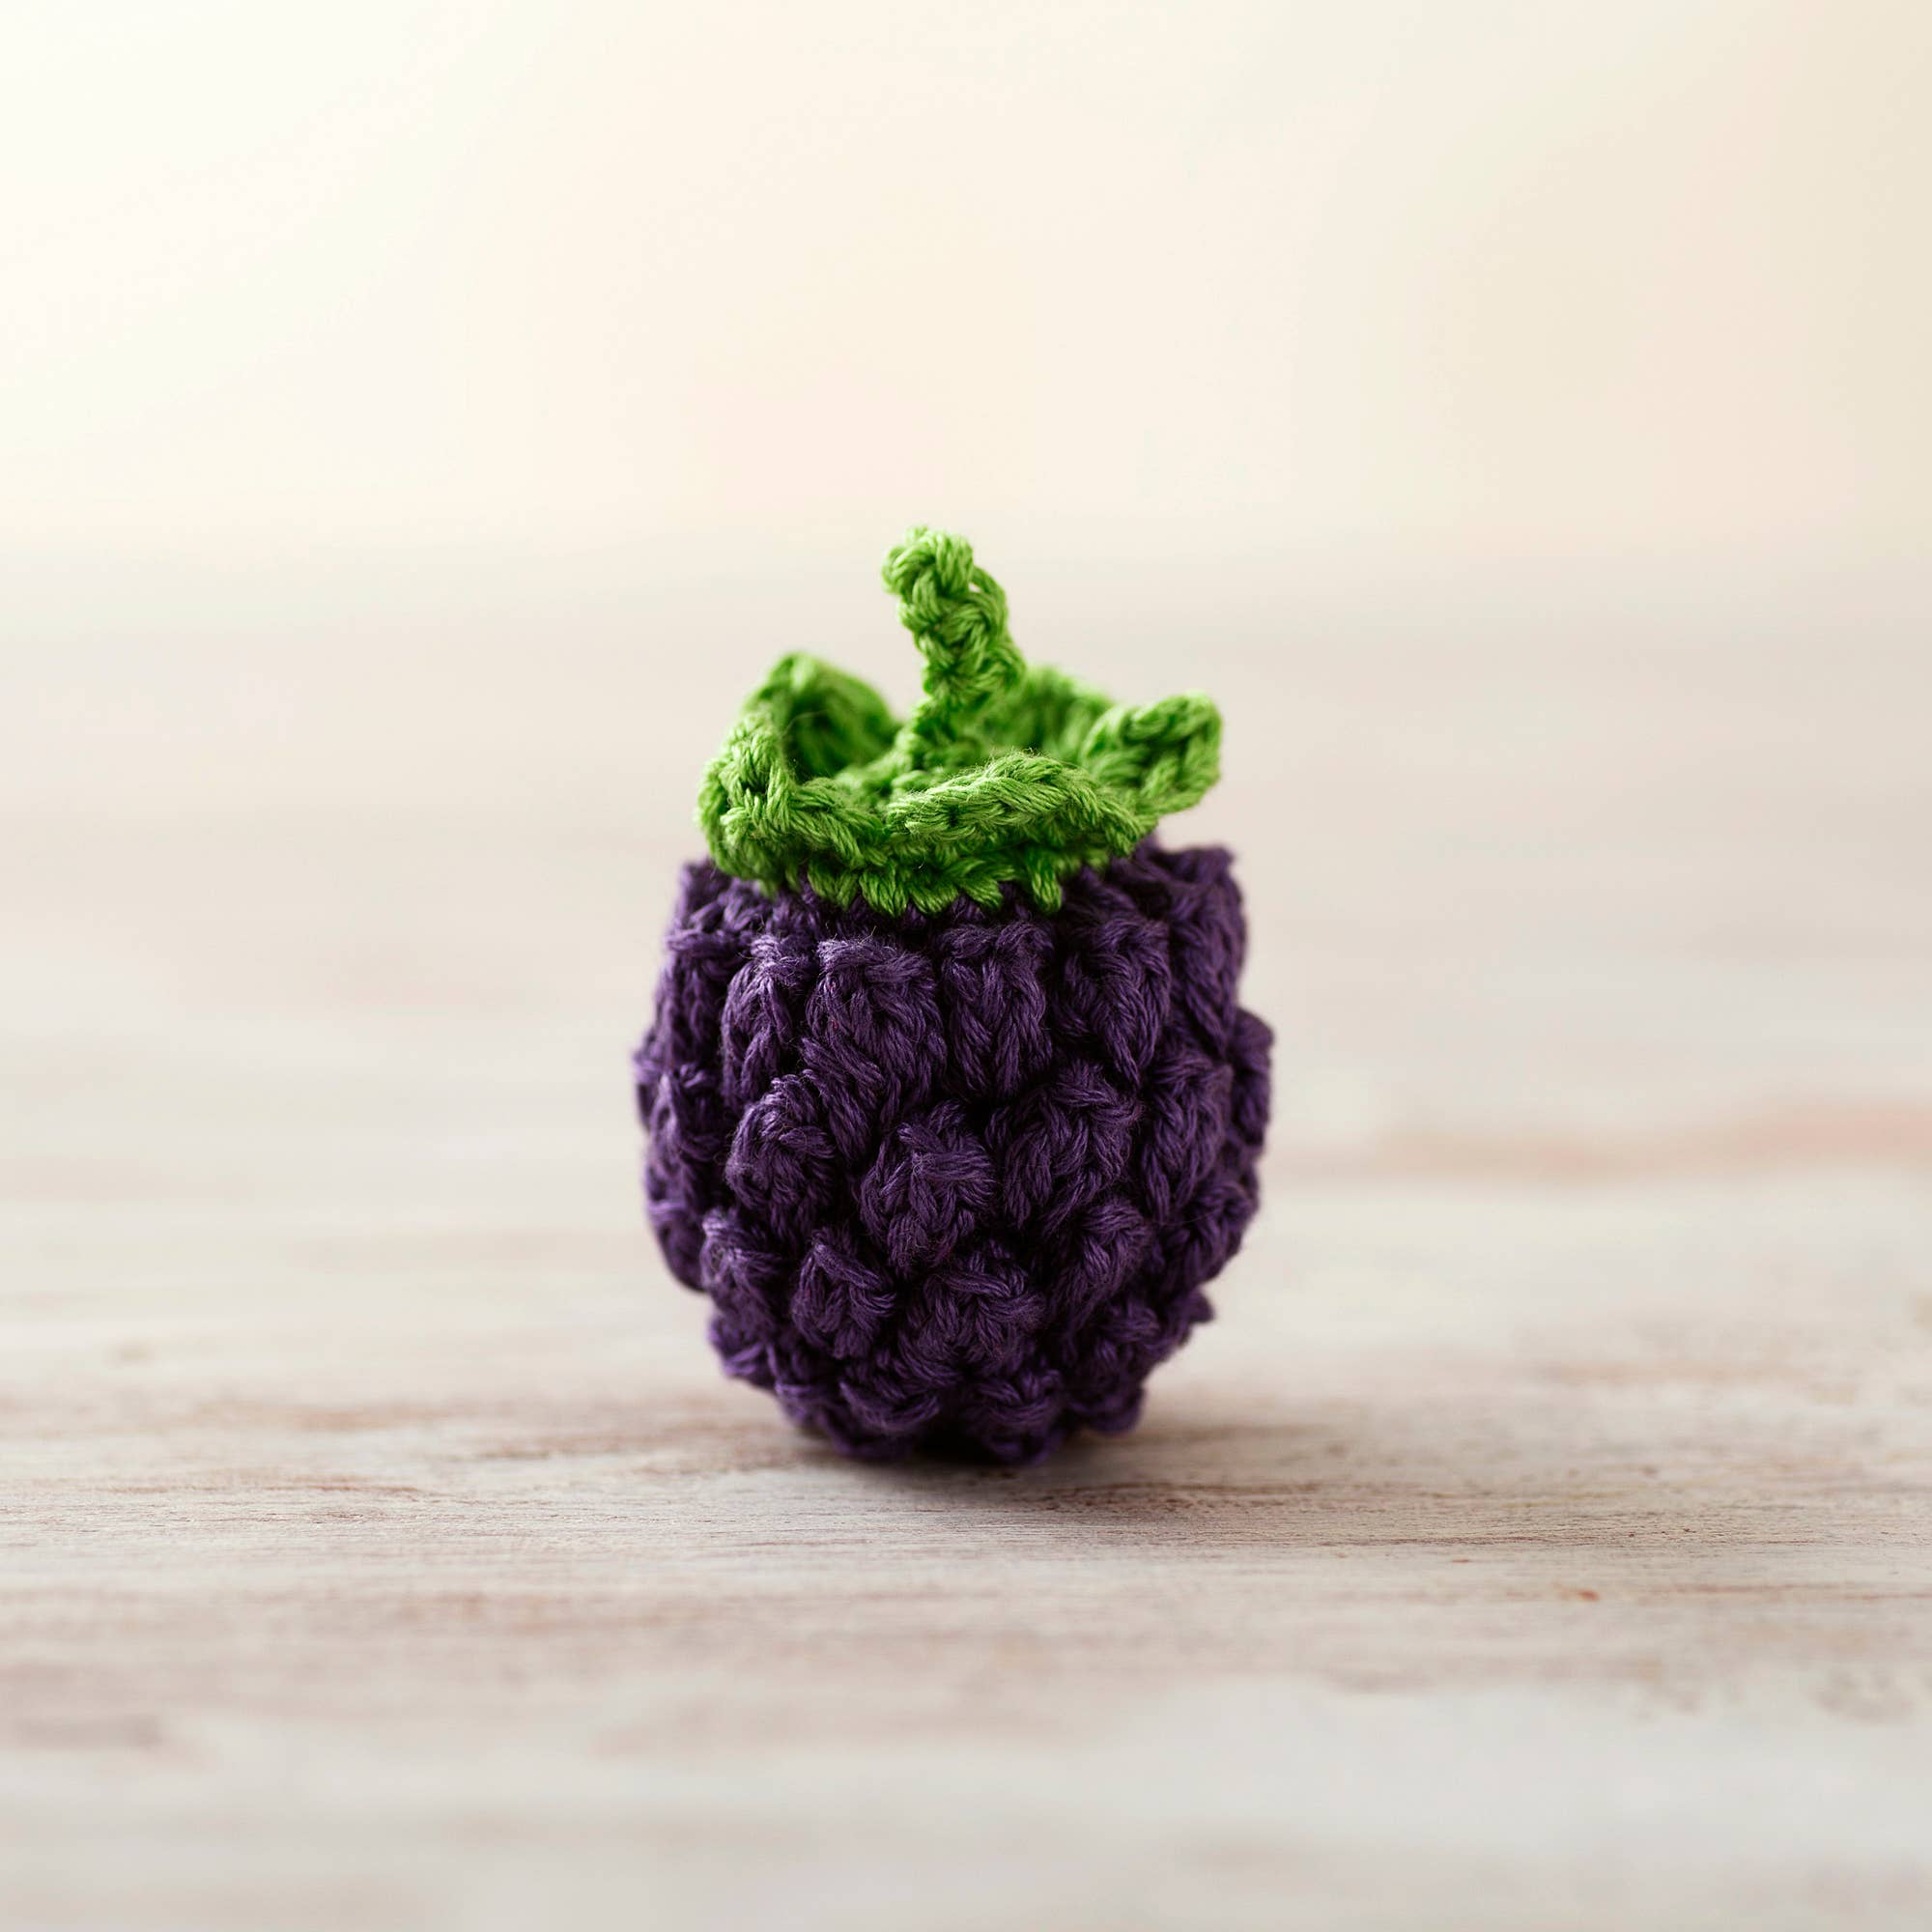 FREE Cute Blueberry plush: Crochet pattern